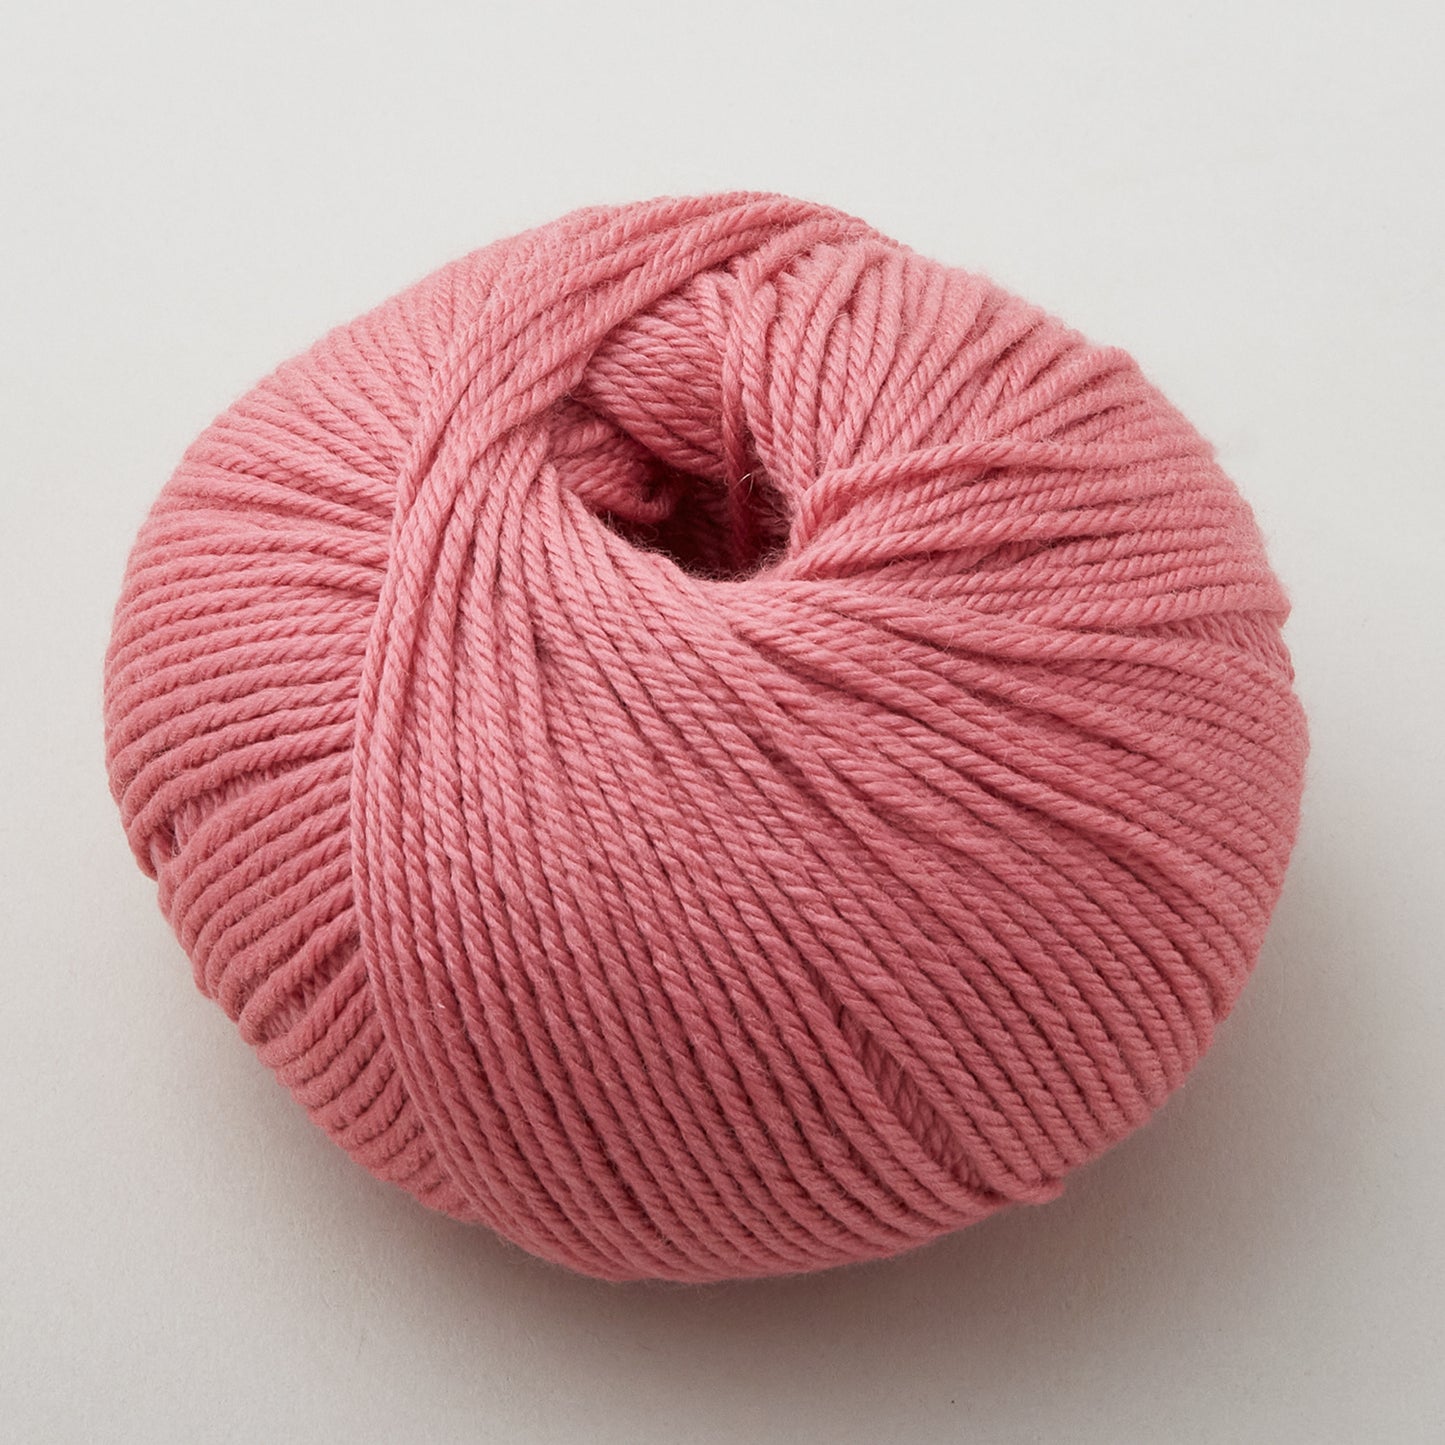 Pinwheels for Baby Blanket Knit Kit - Cerise Alternative View #1